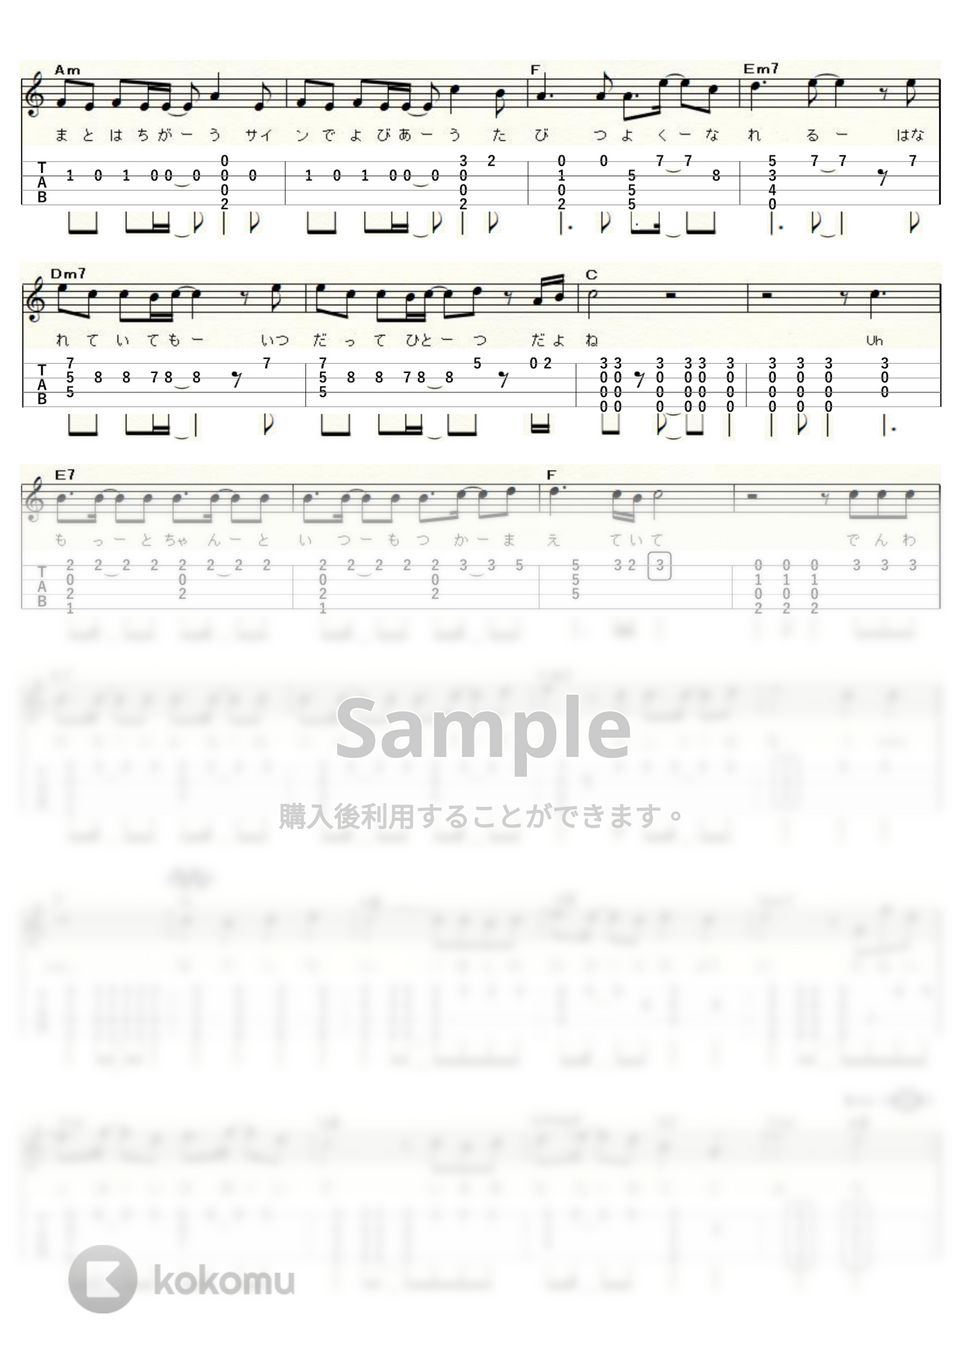 SPEED - WHITE LOVE (ｳｸﾚﾚｿﾛ / High-G・Low-G / 中級～上級) by ukulelepapa